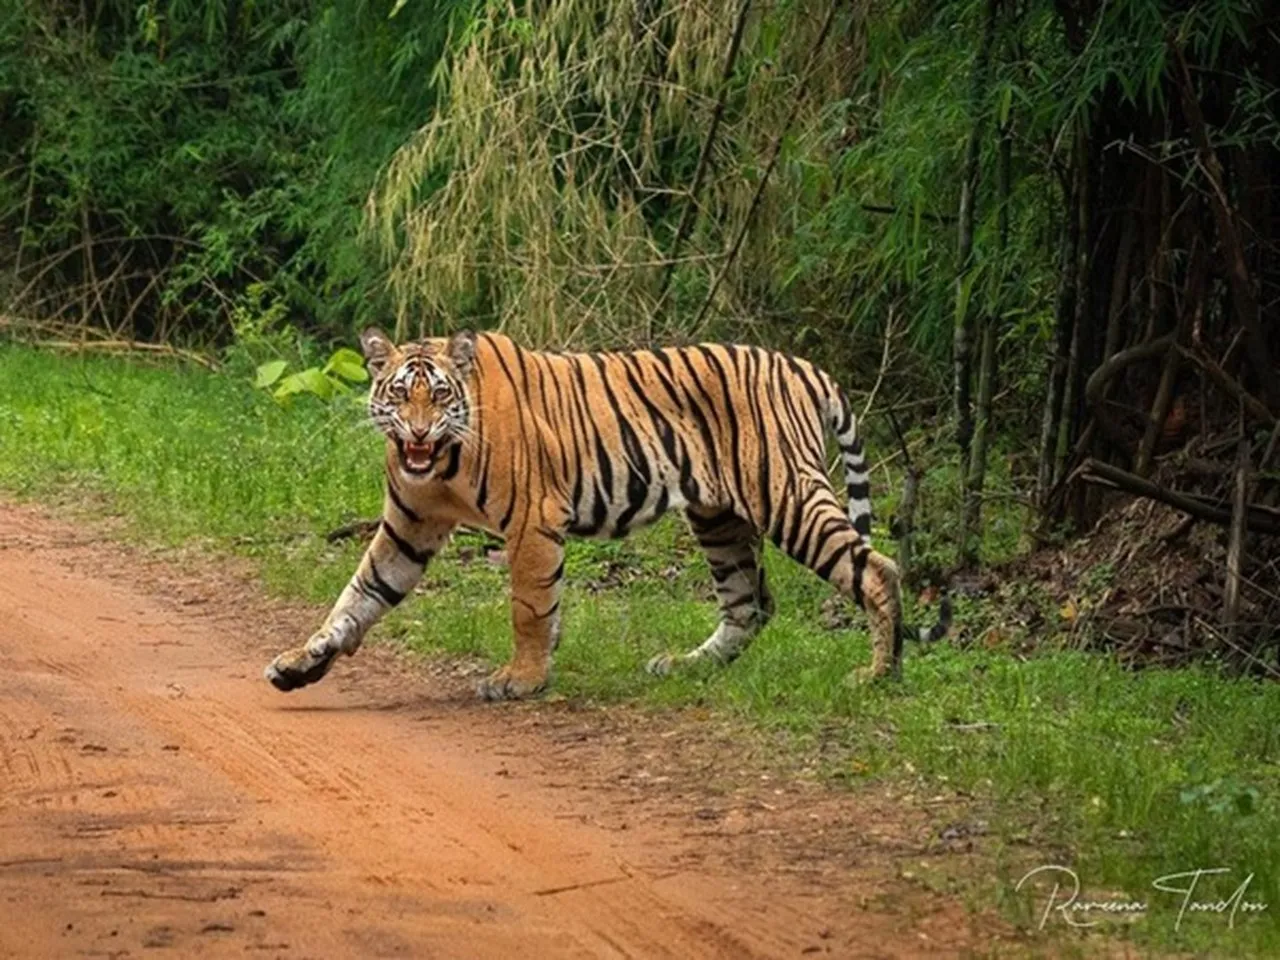 Tigers seen roaming in Bhowali range of Nainital; patrols intensified